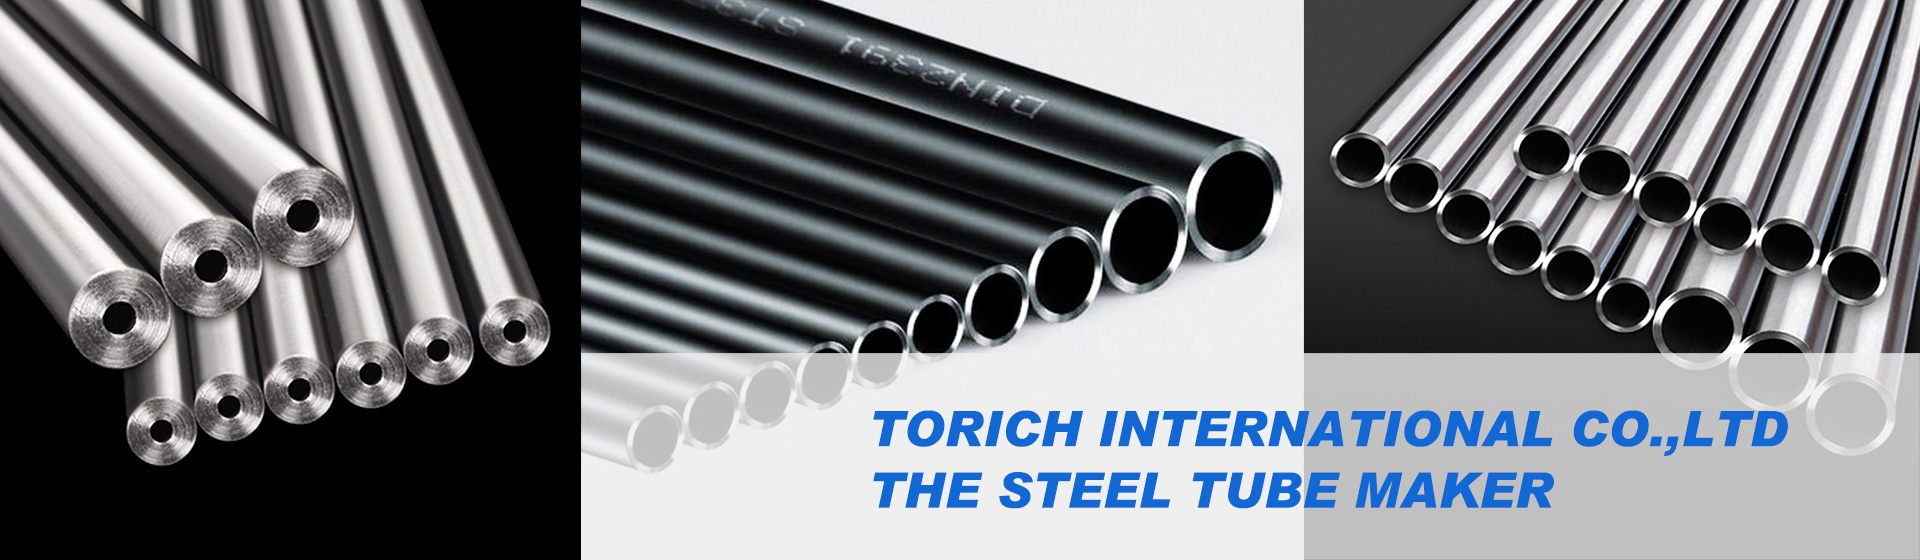 Torich International Limited--The Steel Tube Maker